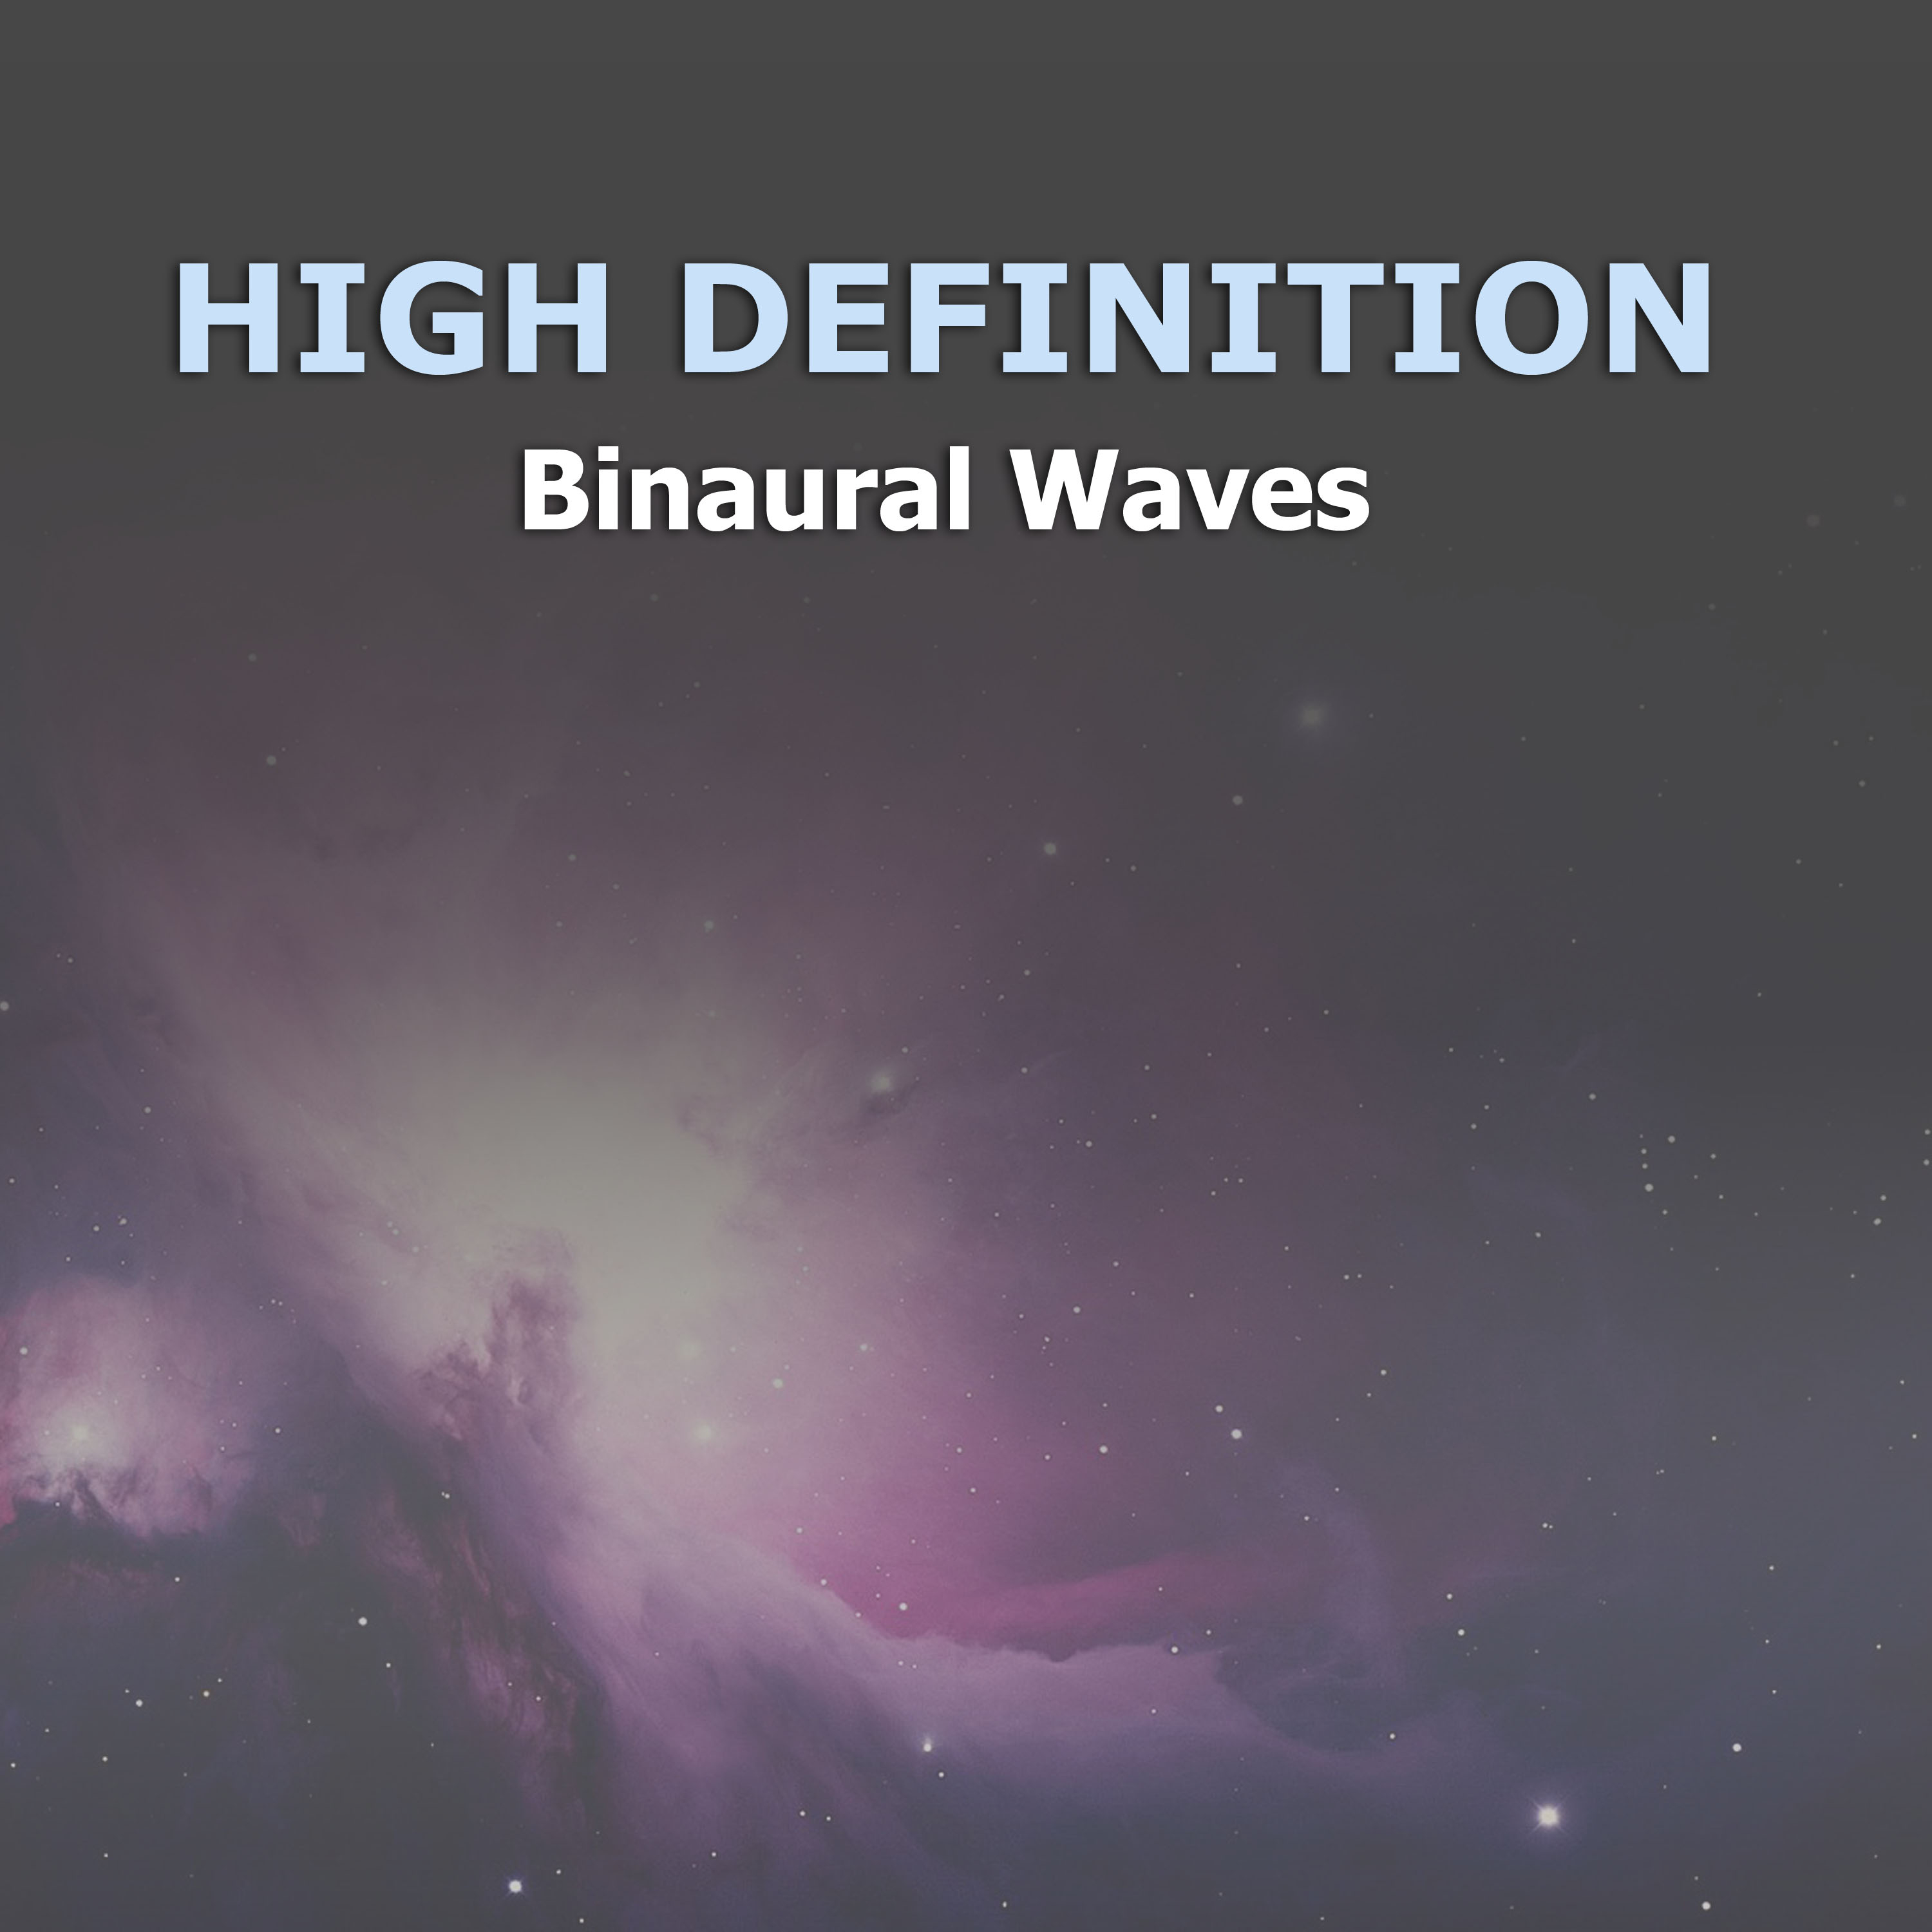 16 High Definition Binaural Waves